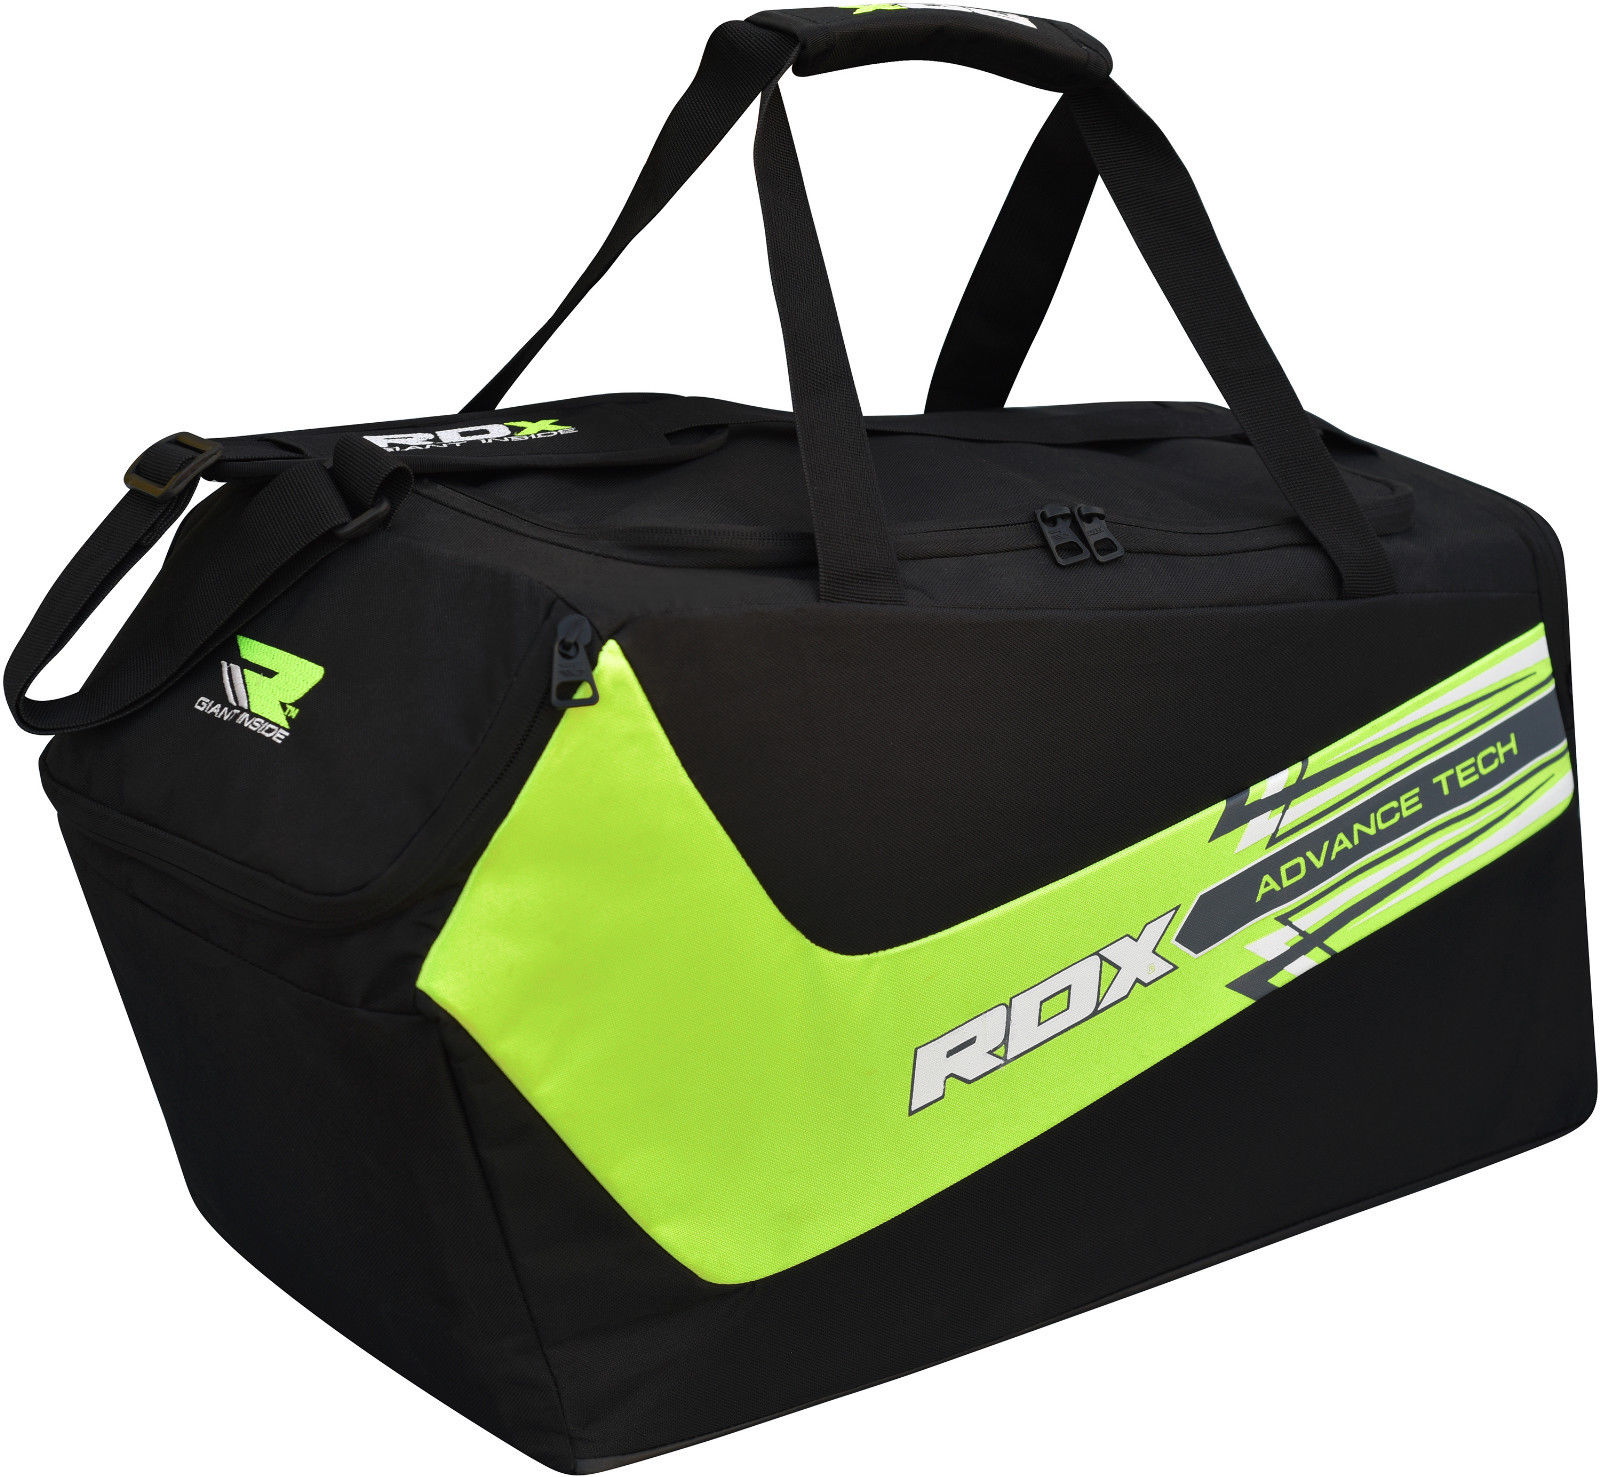 RDX Gym Gear Kit Duffle Bag Duffle Gymsack Gymnast Sports Backpack Fitness Sackpack - image 3 of 5